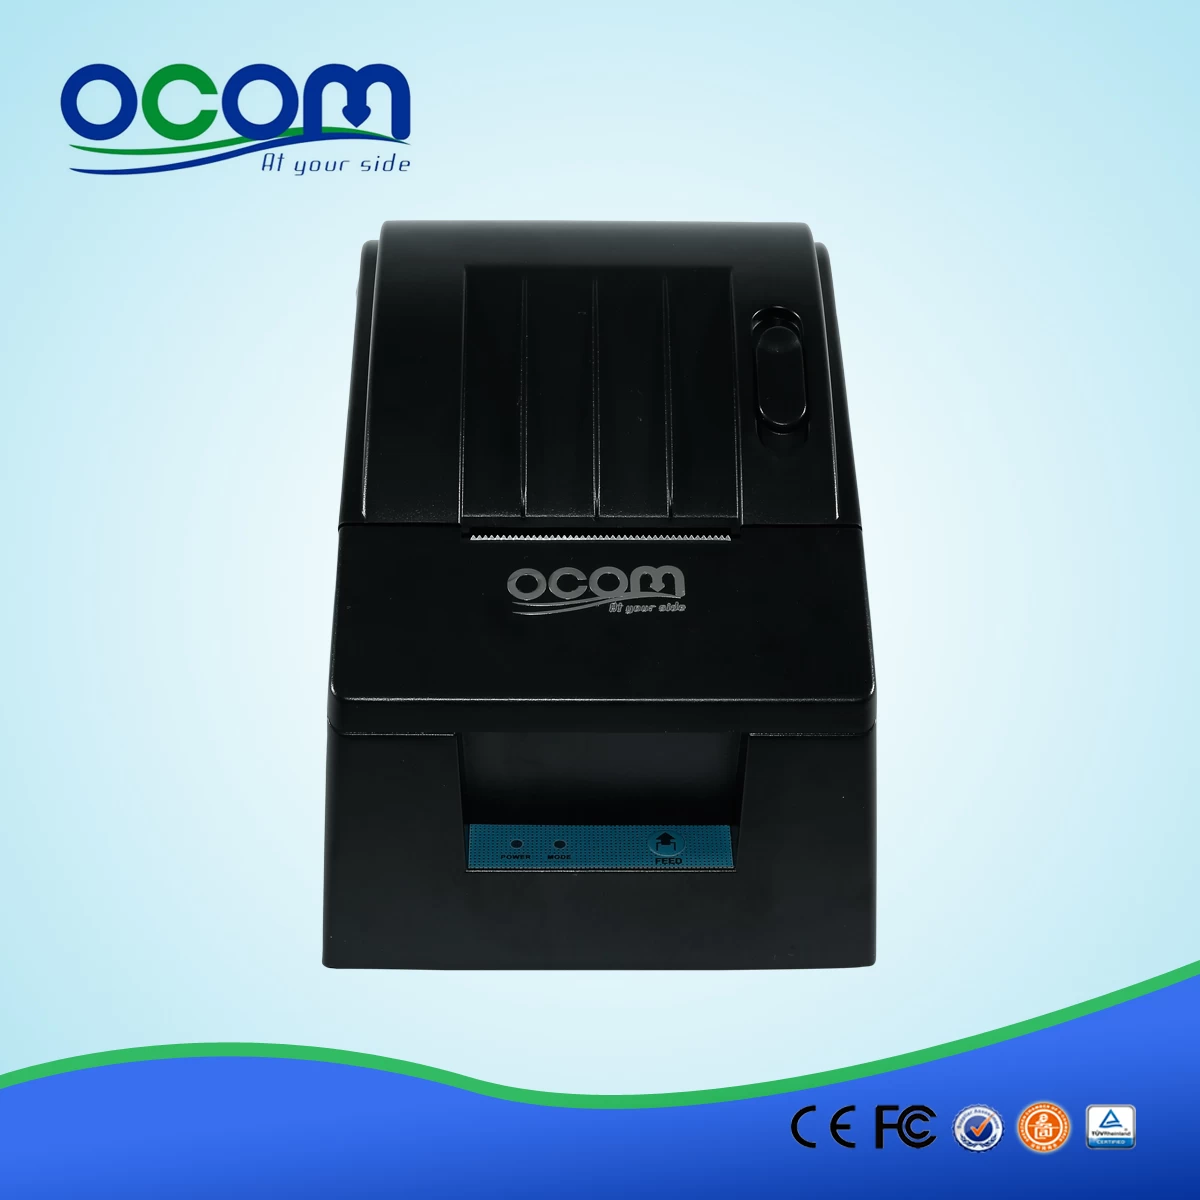 90mm/Sec Speed 58mm Receipt Thermal Printer